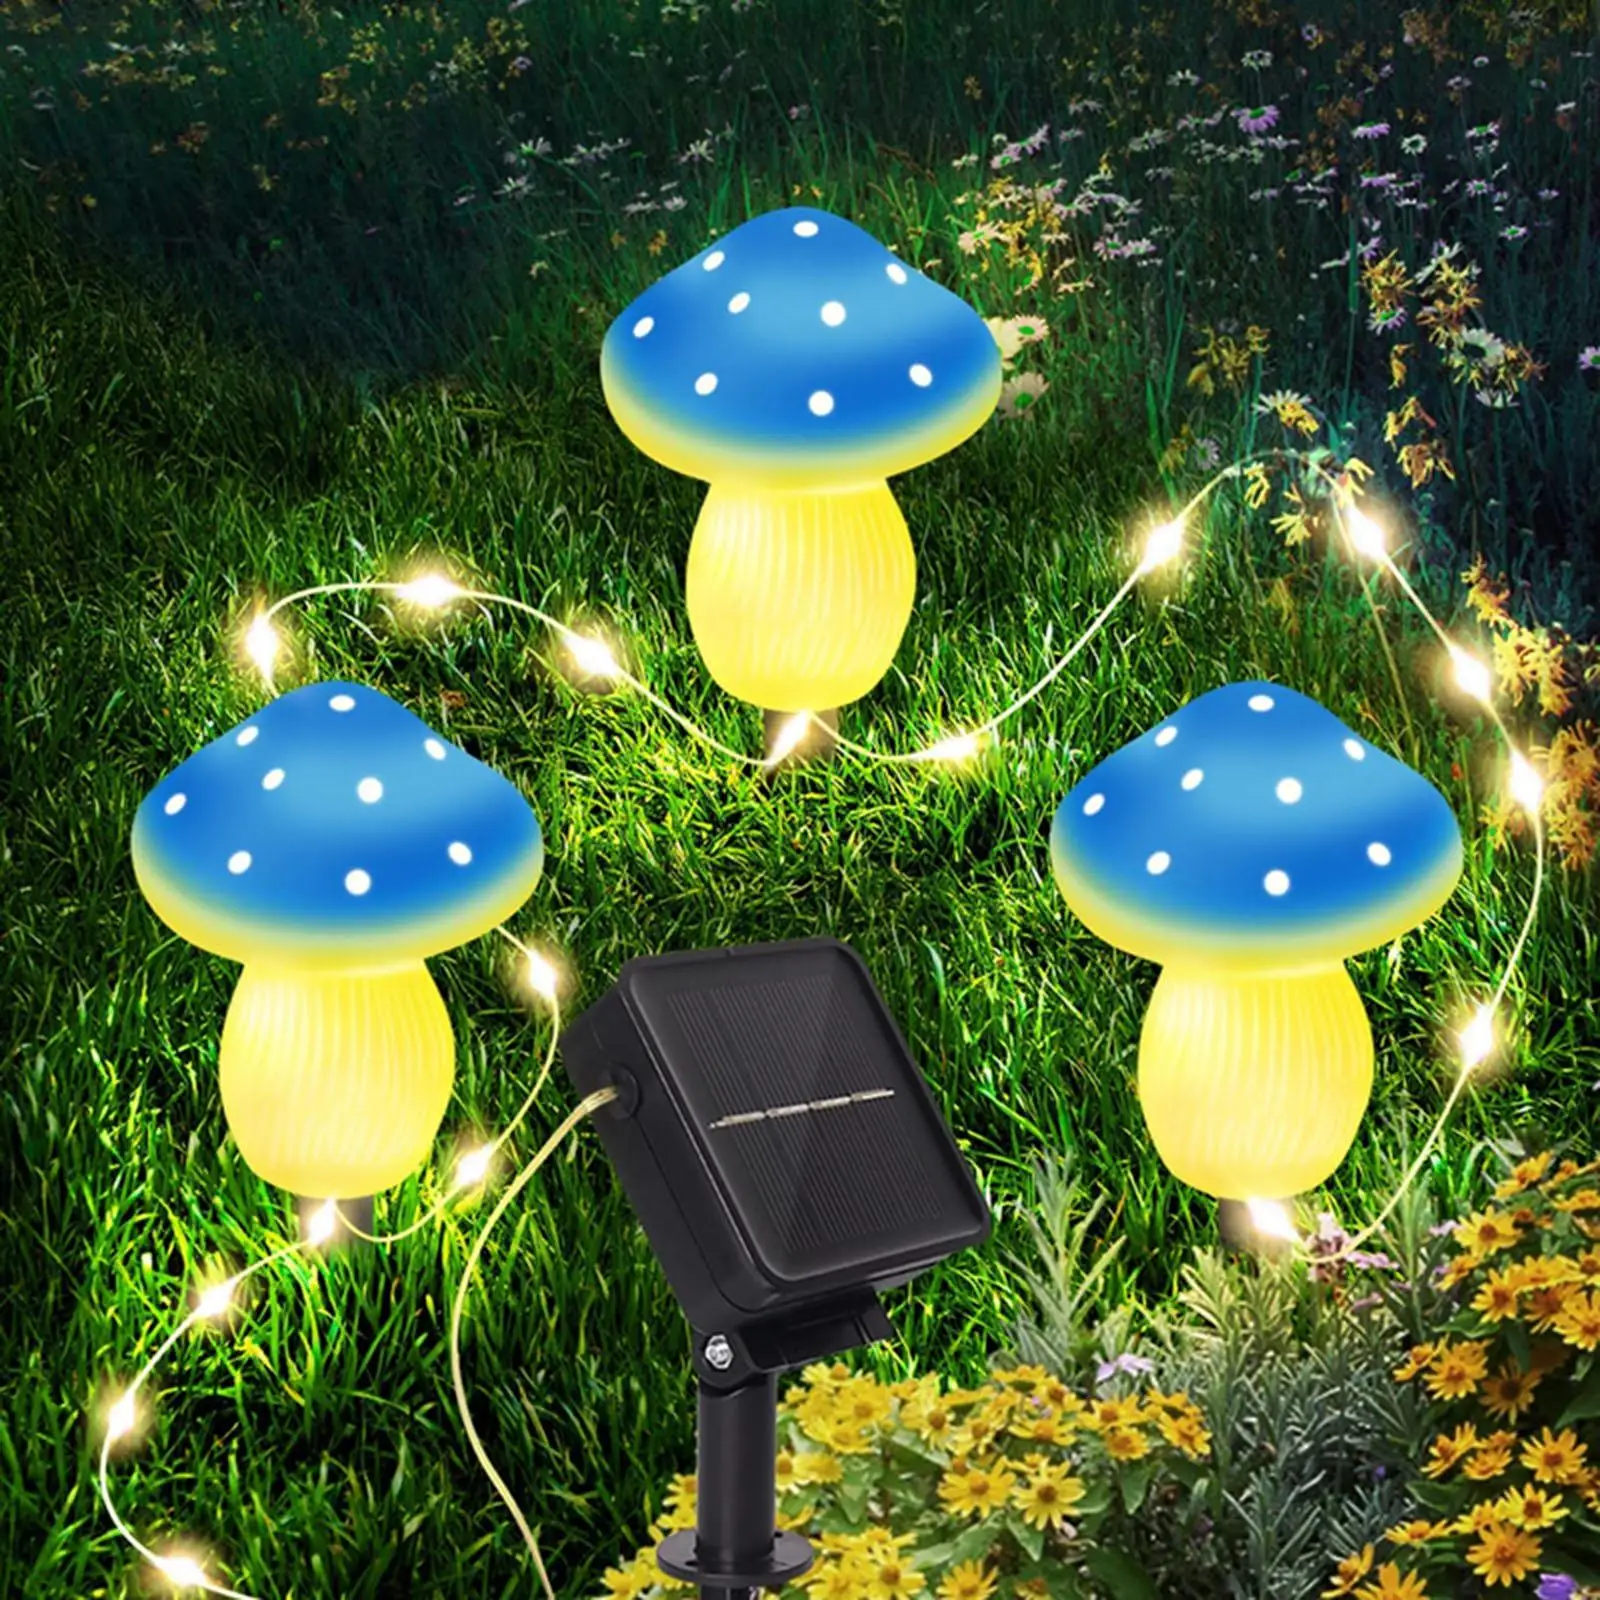 Outdoor Solar Garden Lights Automatical Solar Mushroom Decor for Fence Backyard Lawn